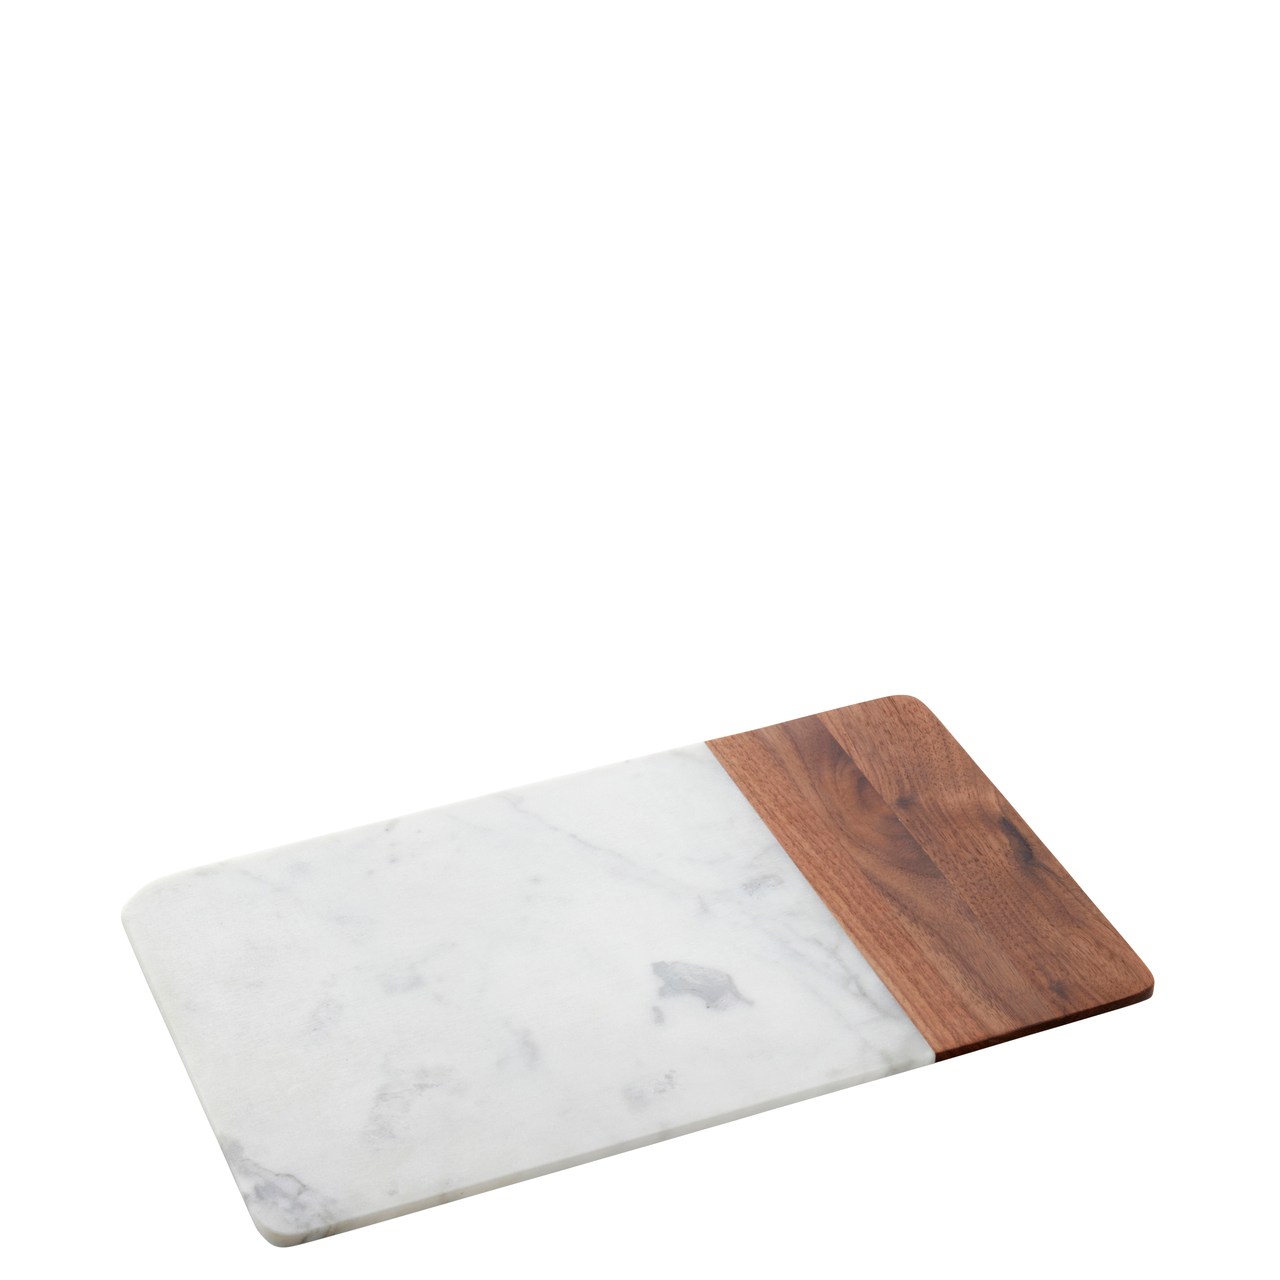 Board rectangular marble/wood 30.5x18.4x